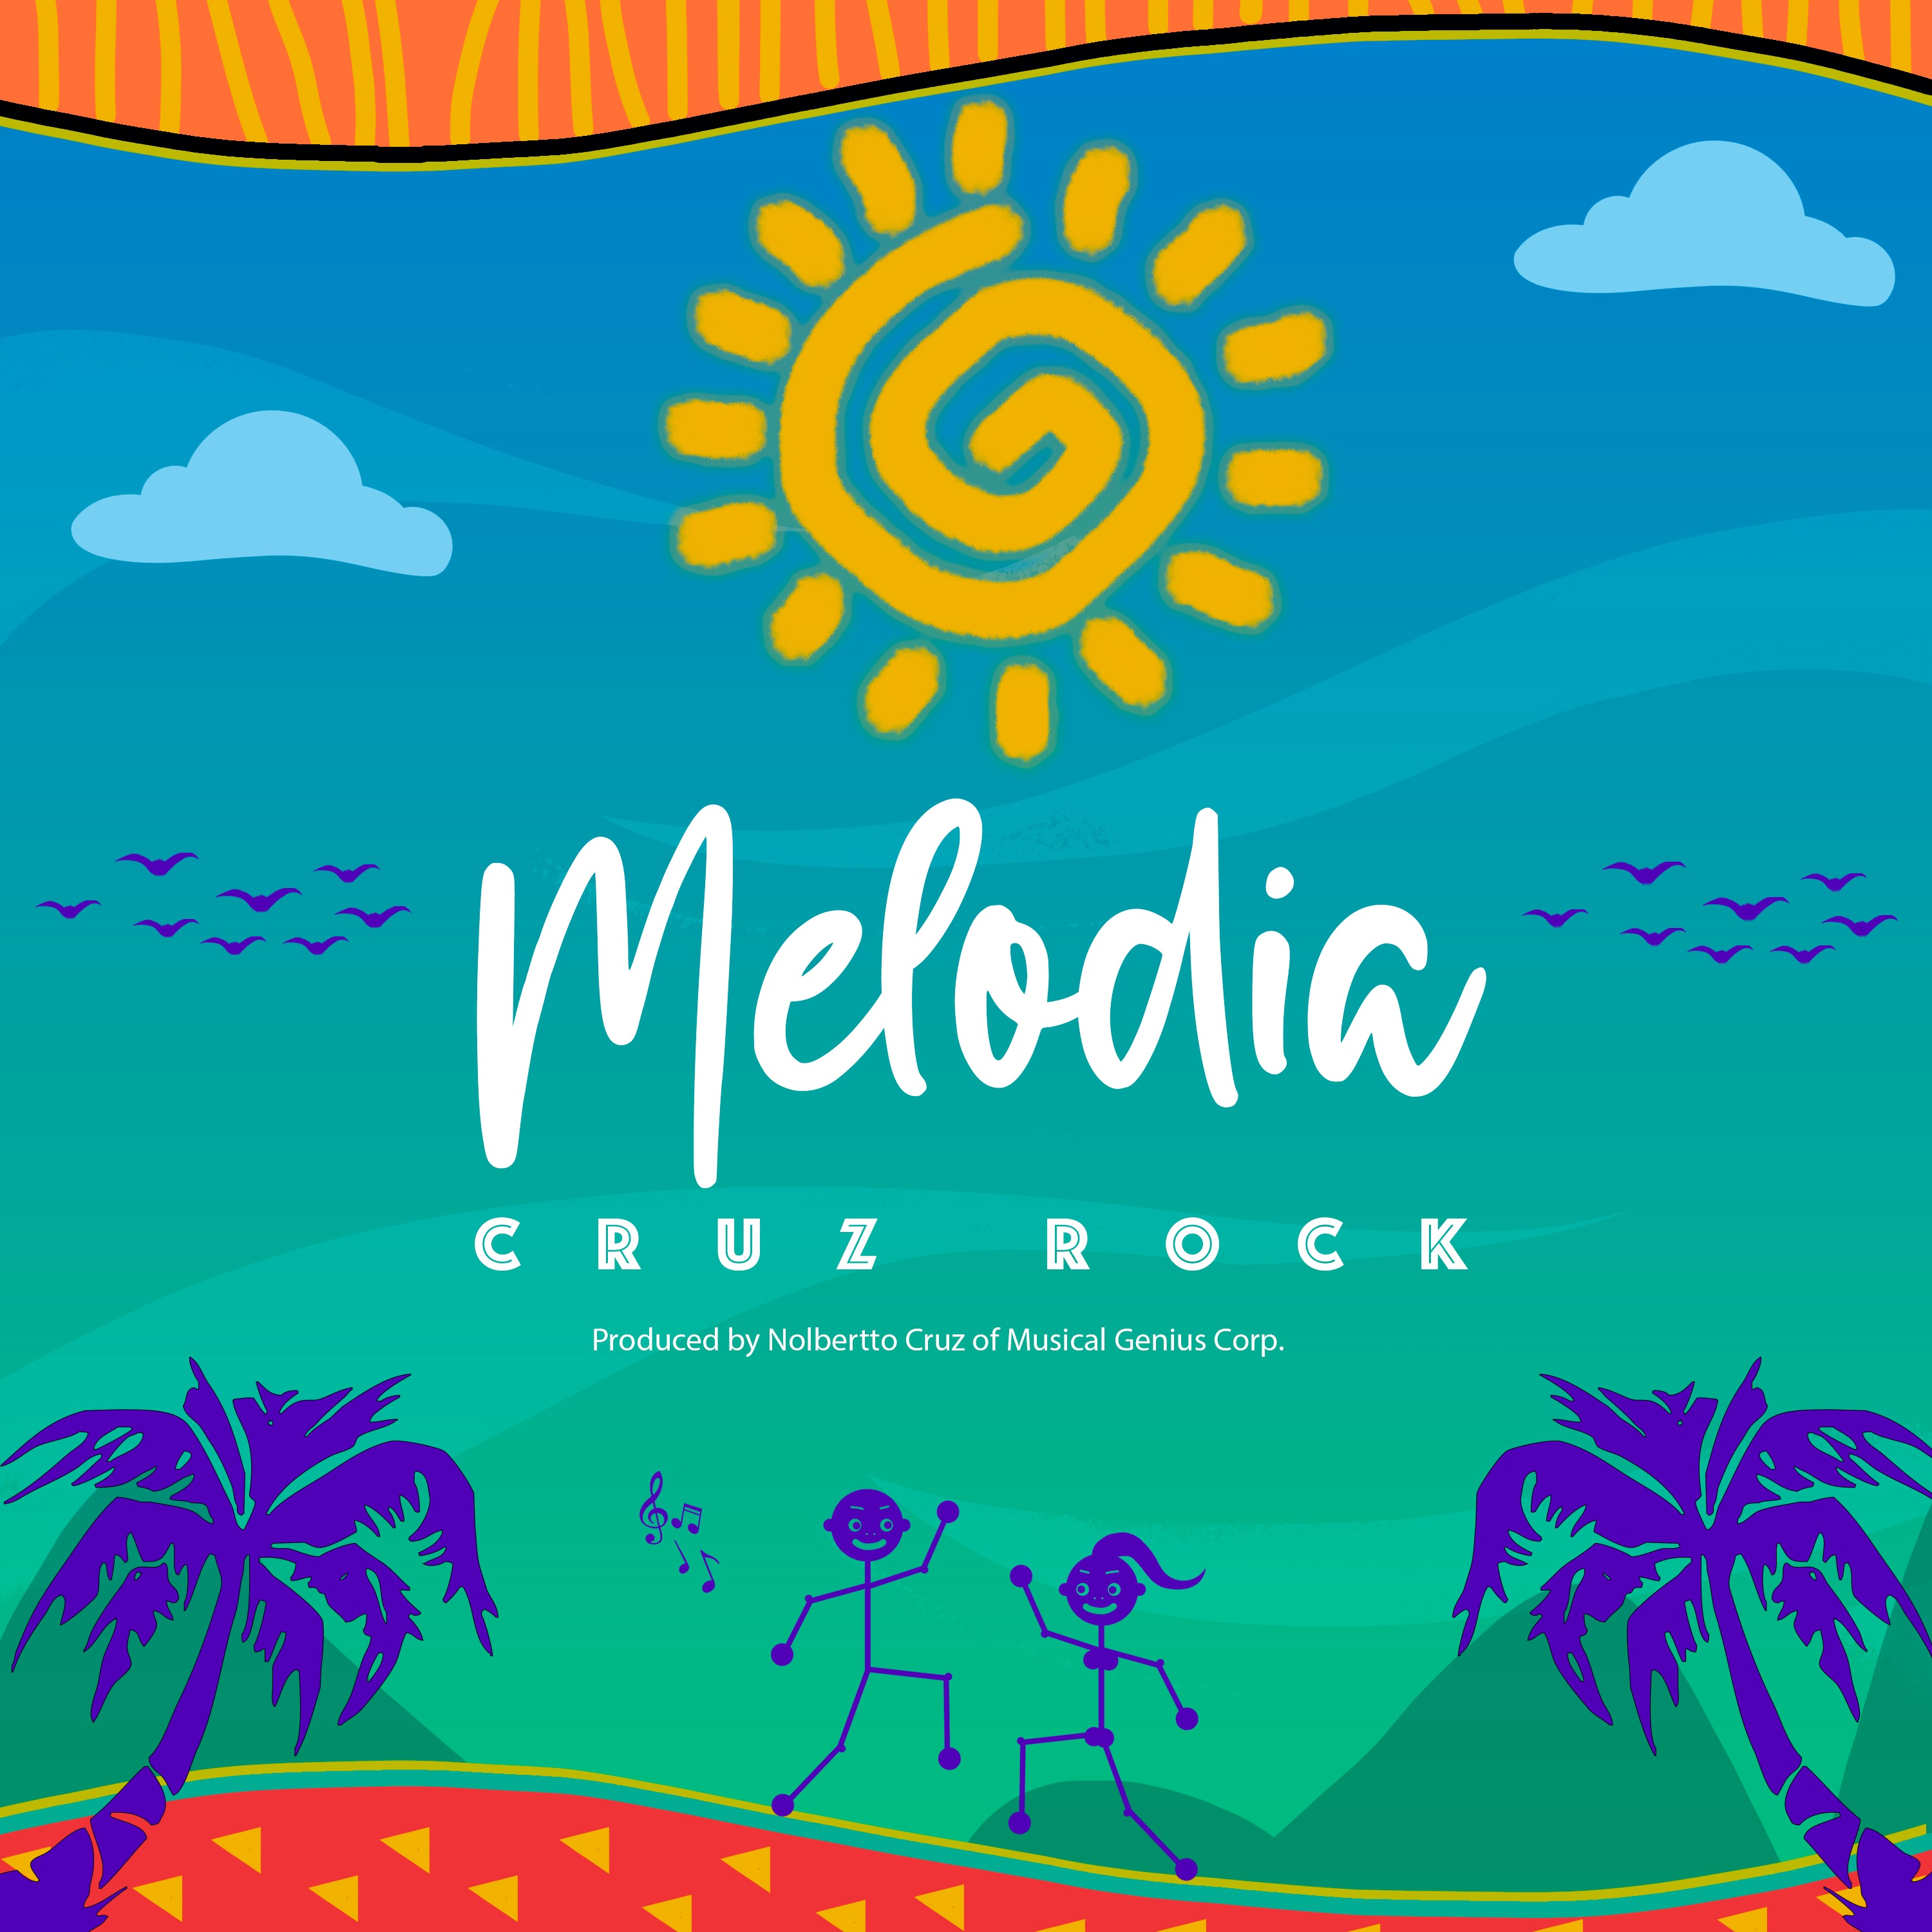 Ladda ner Melodia by Cruz Rock